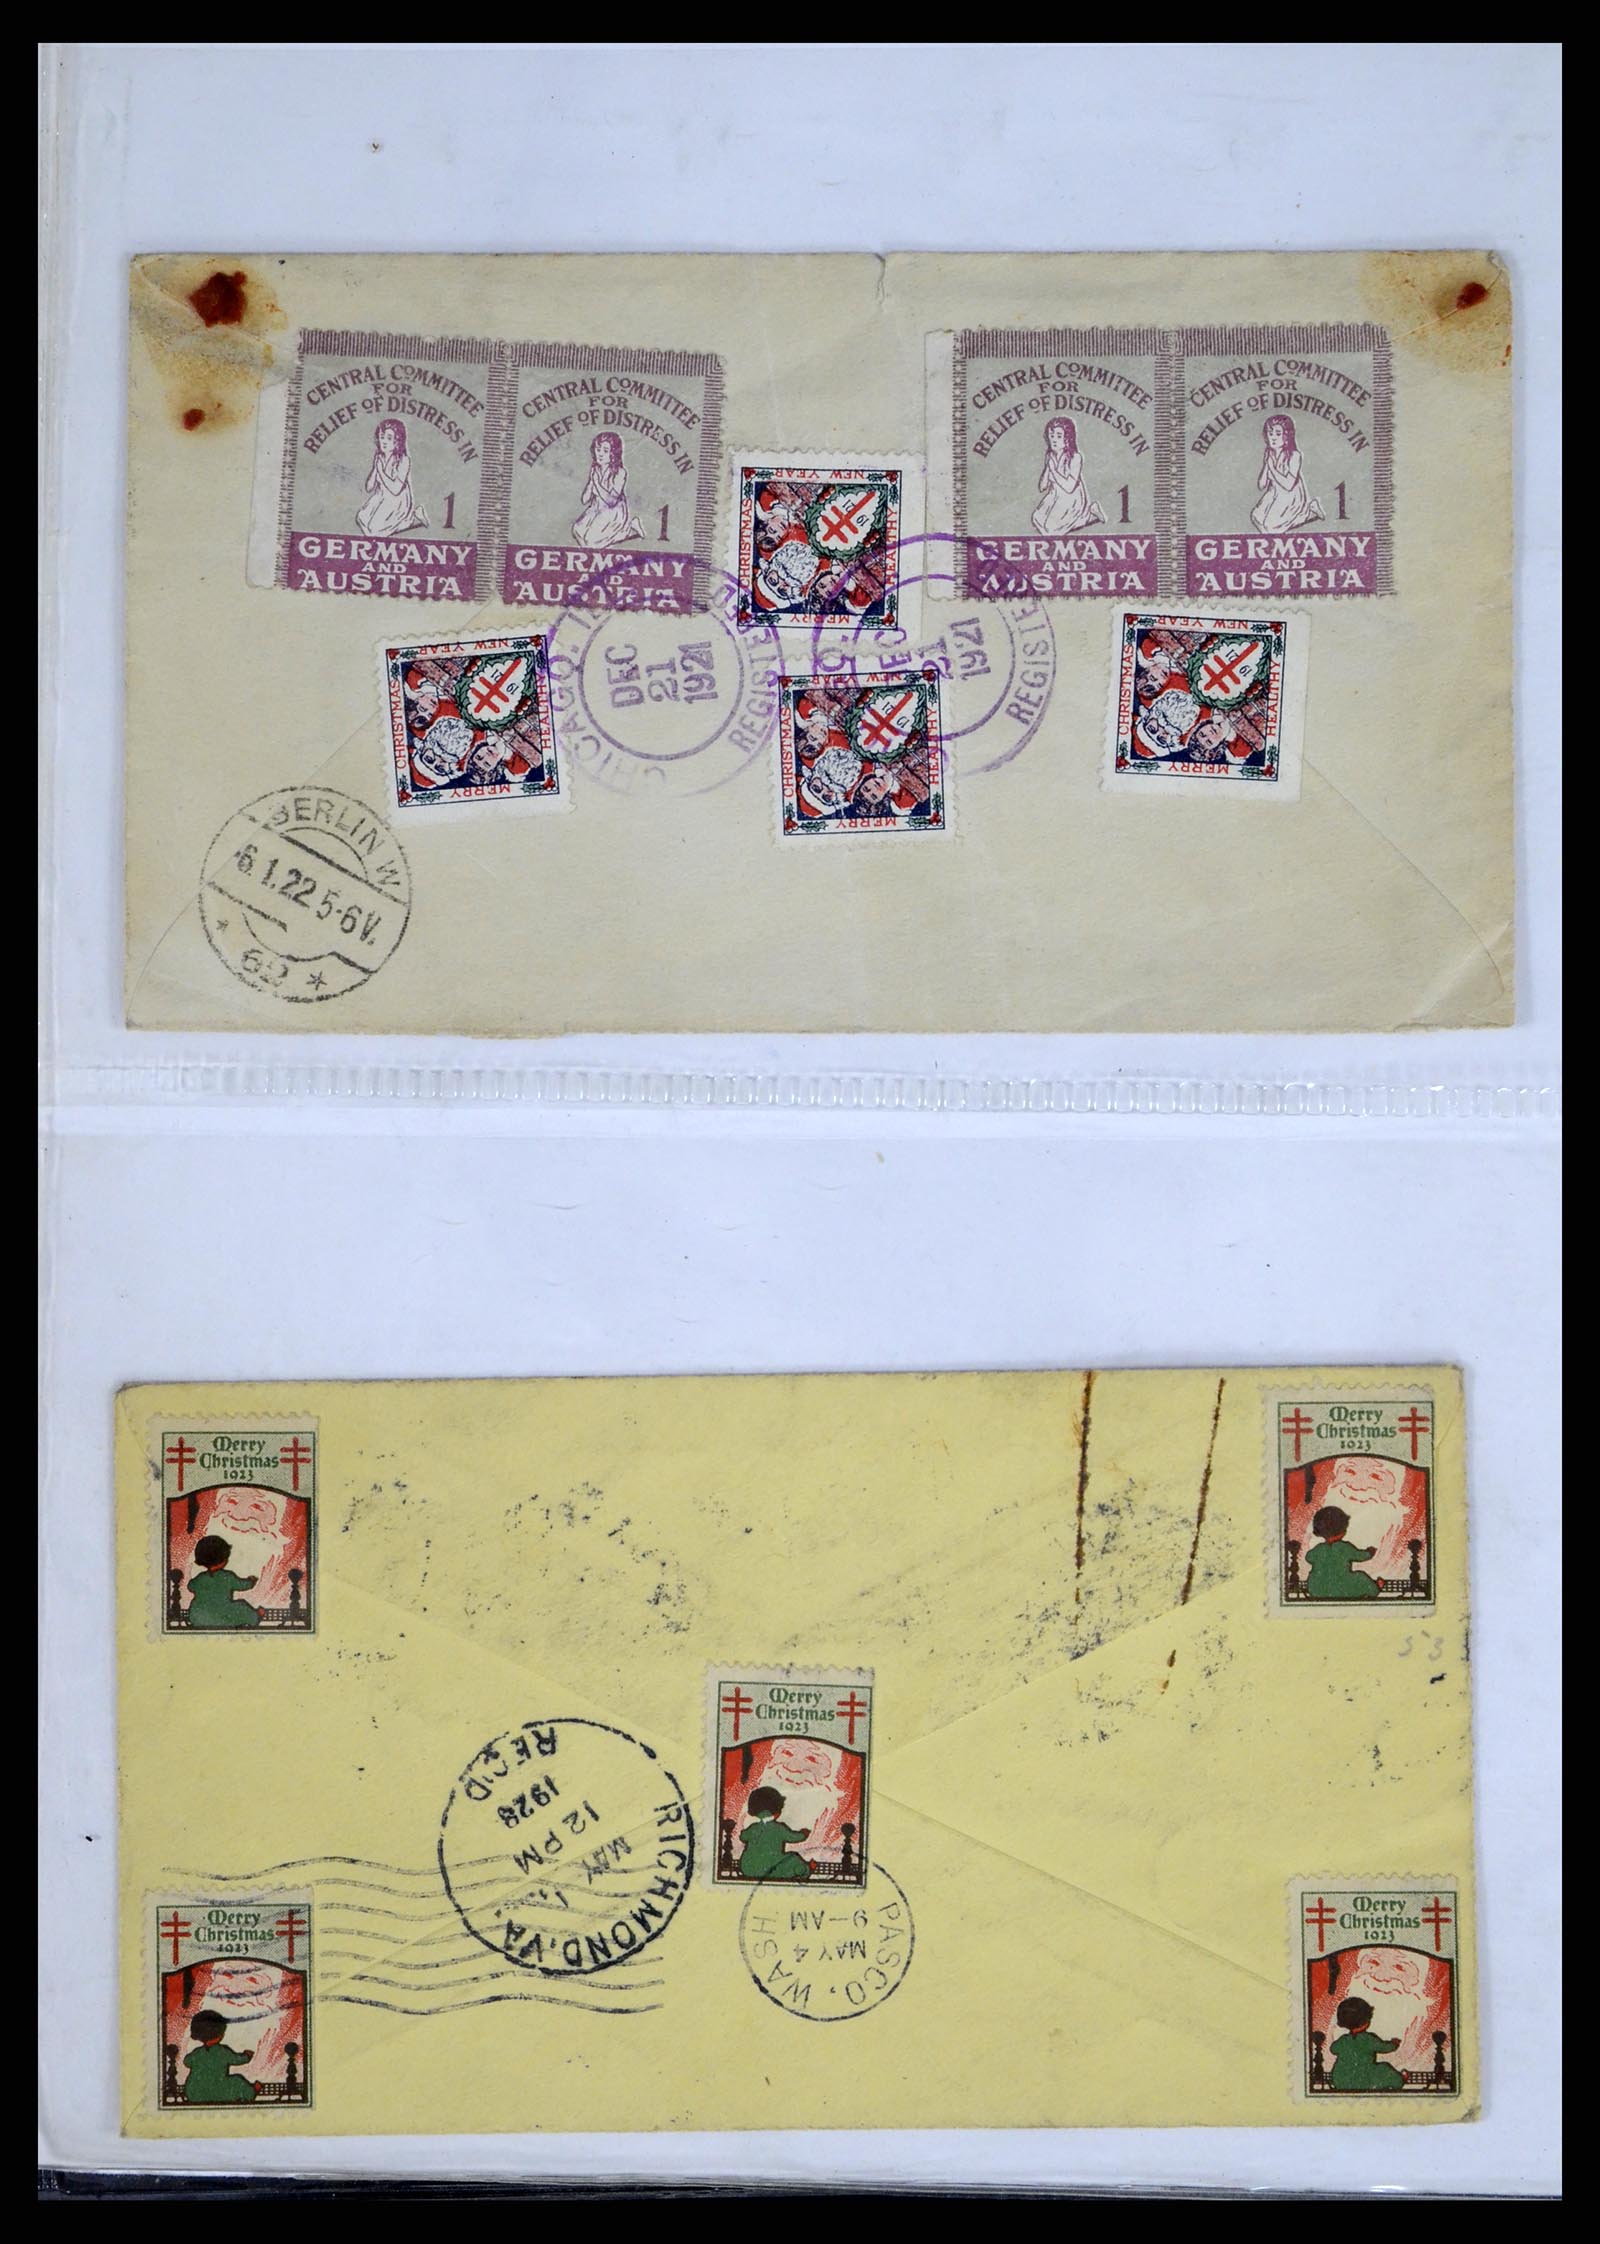 37668 014 - Stamp collection 37668 USA Christmas seals on cover 1908-2009.